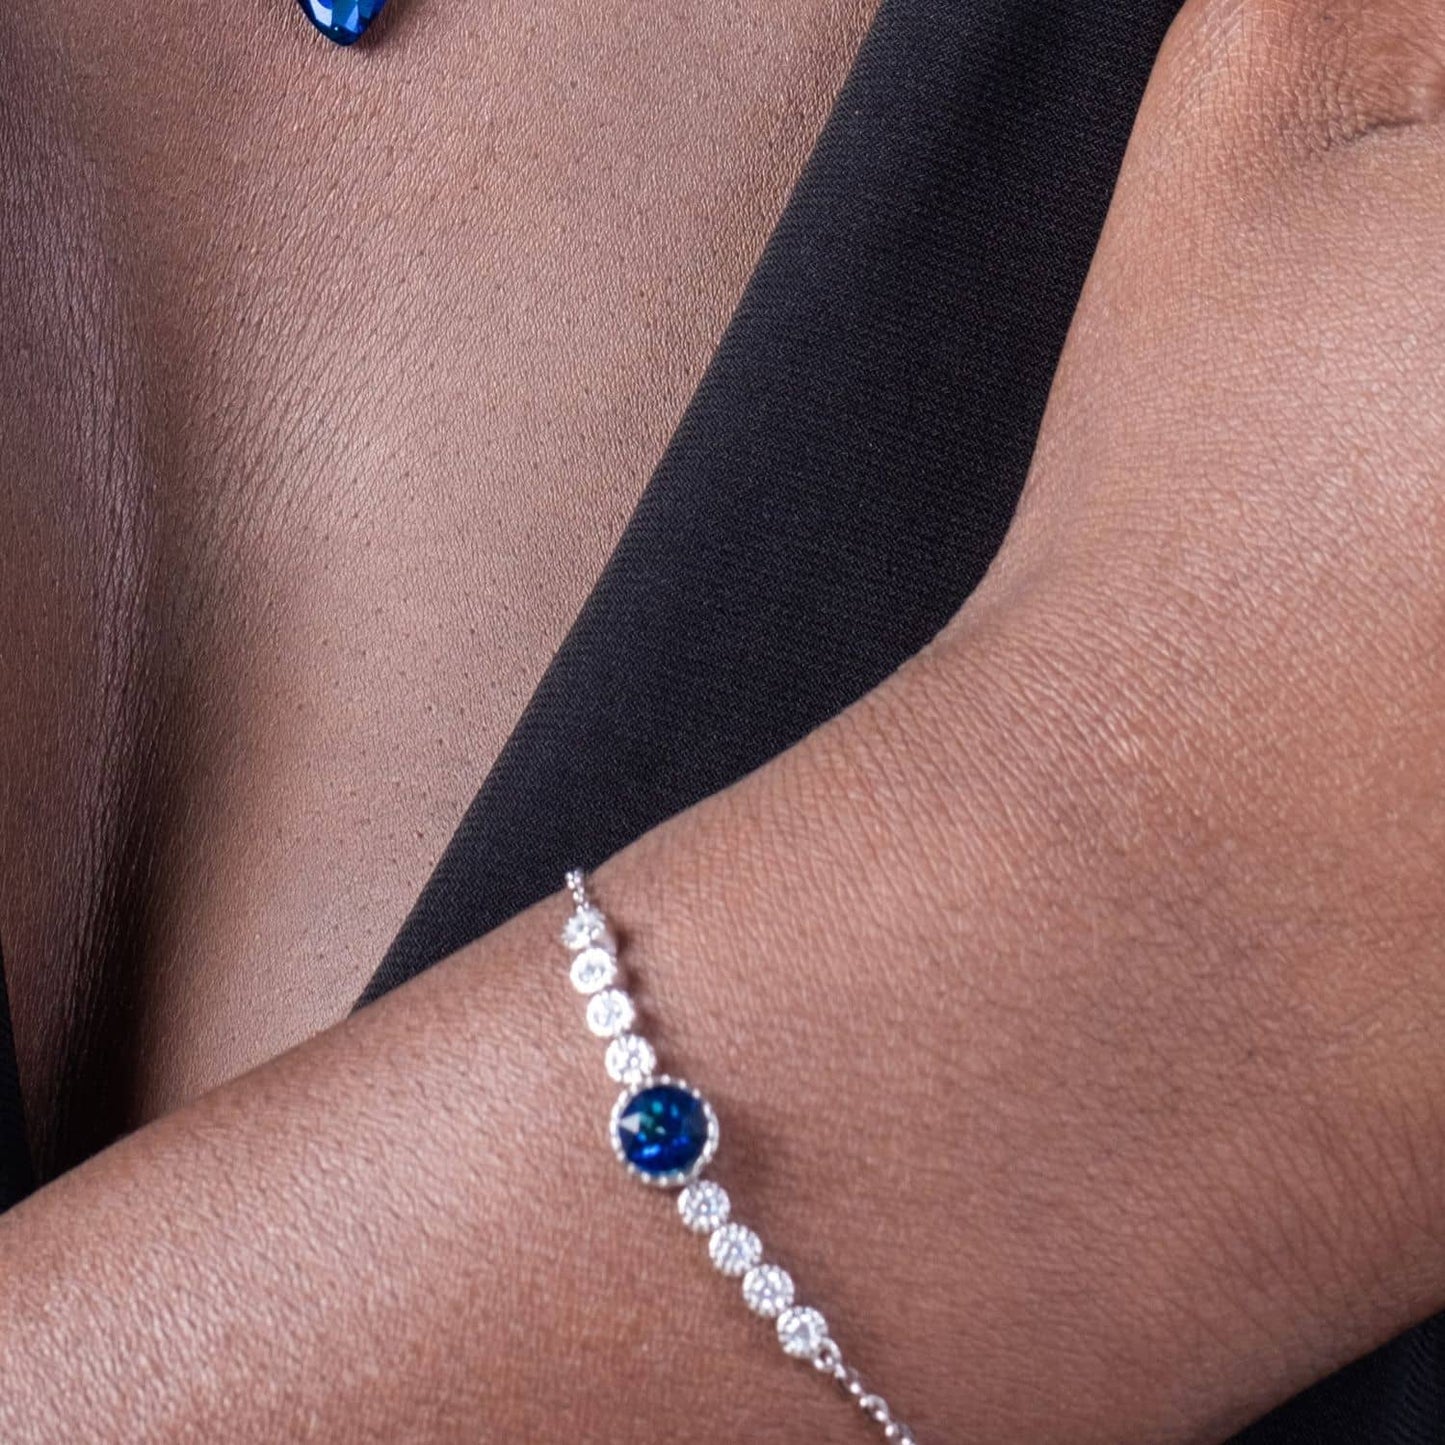 Bermuda Blue Haven Bracelet with Austrian Crystals